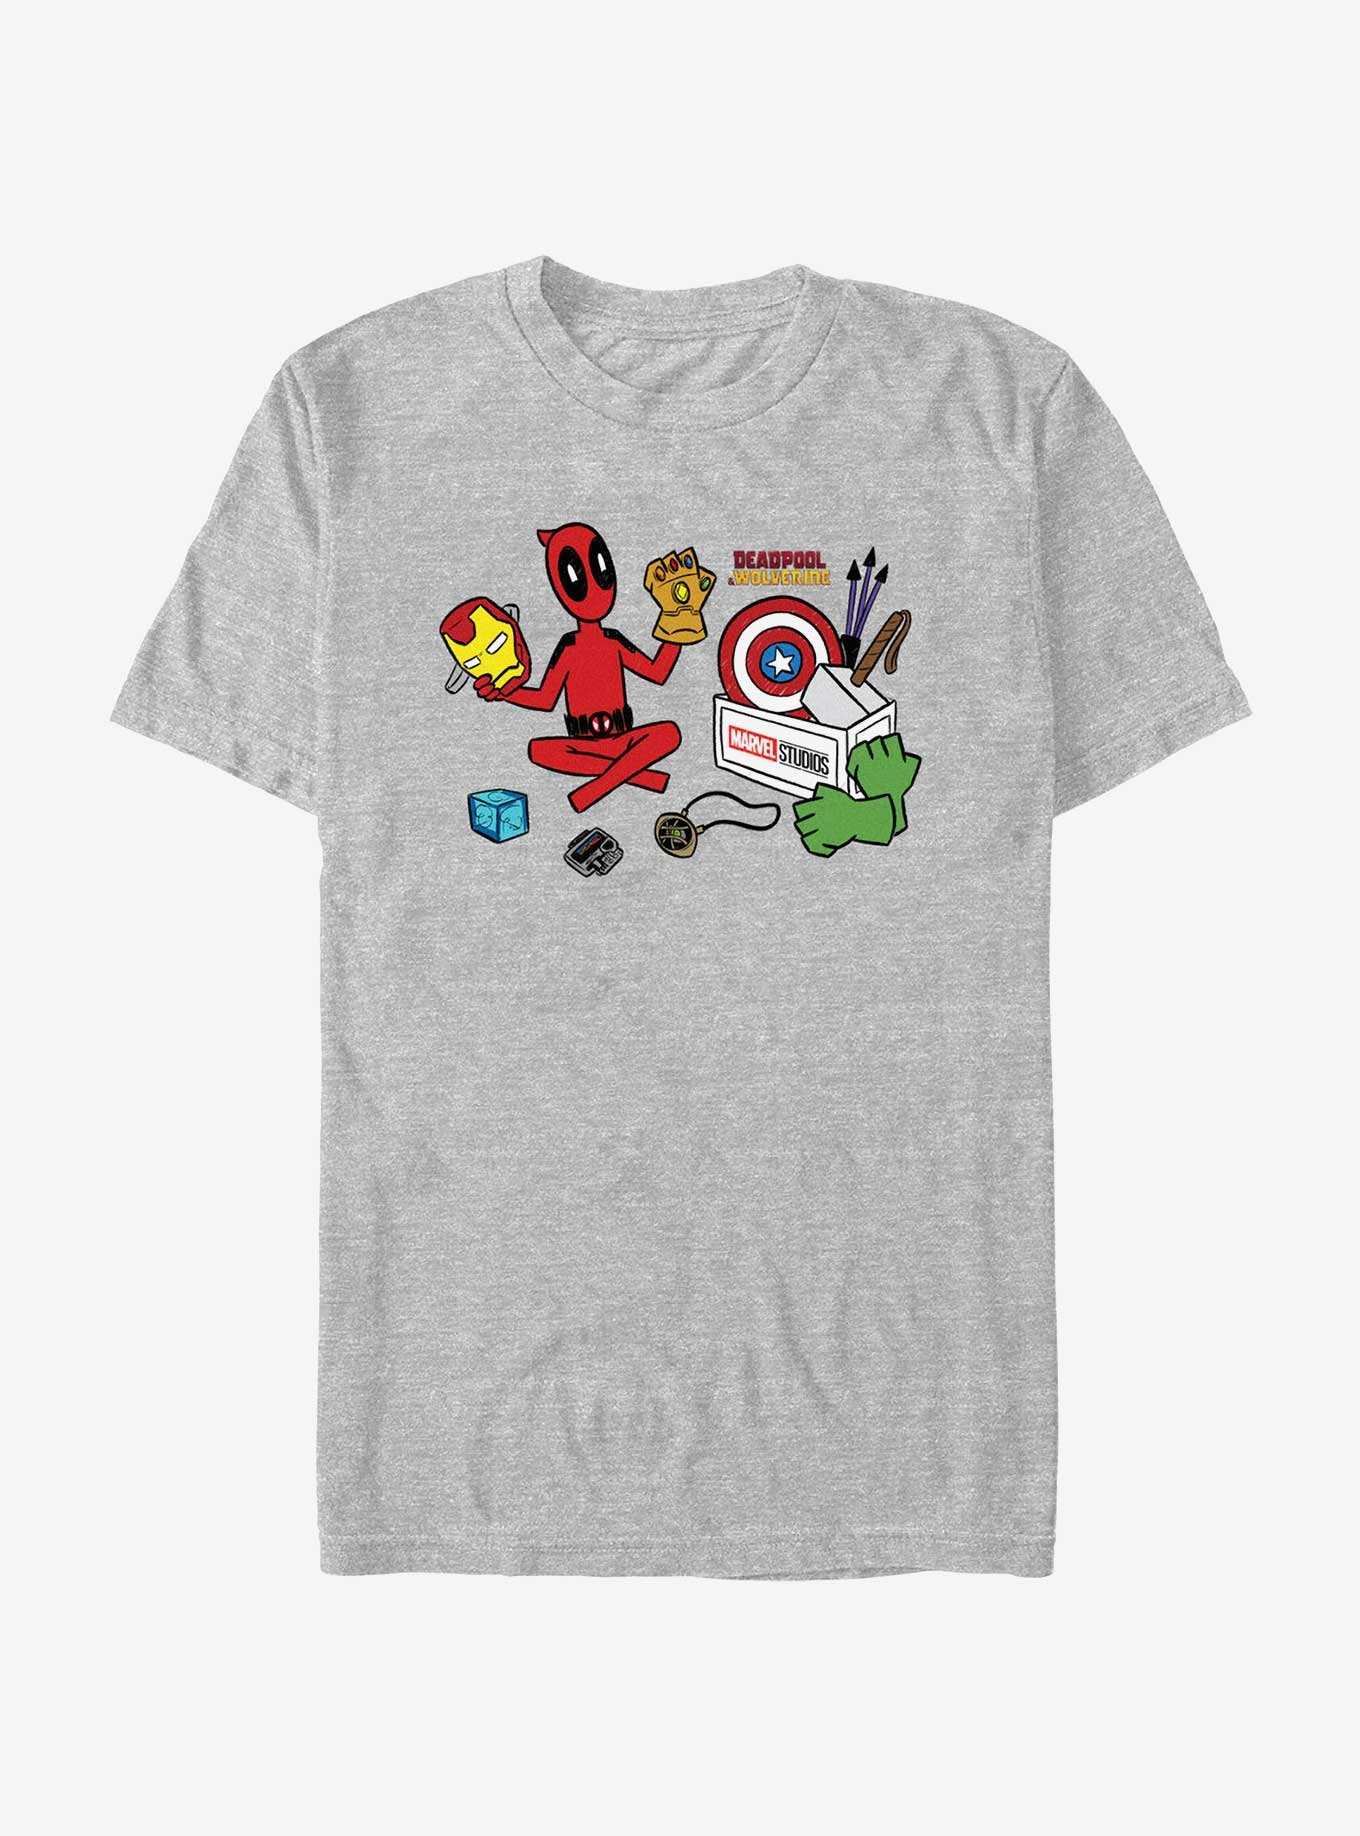 Marvel Deadpool & Wolverine Avengers Things T-Shirt, , hi-res